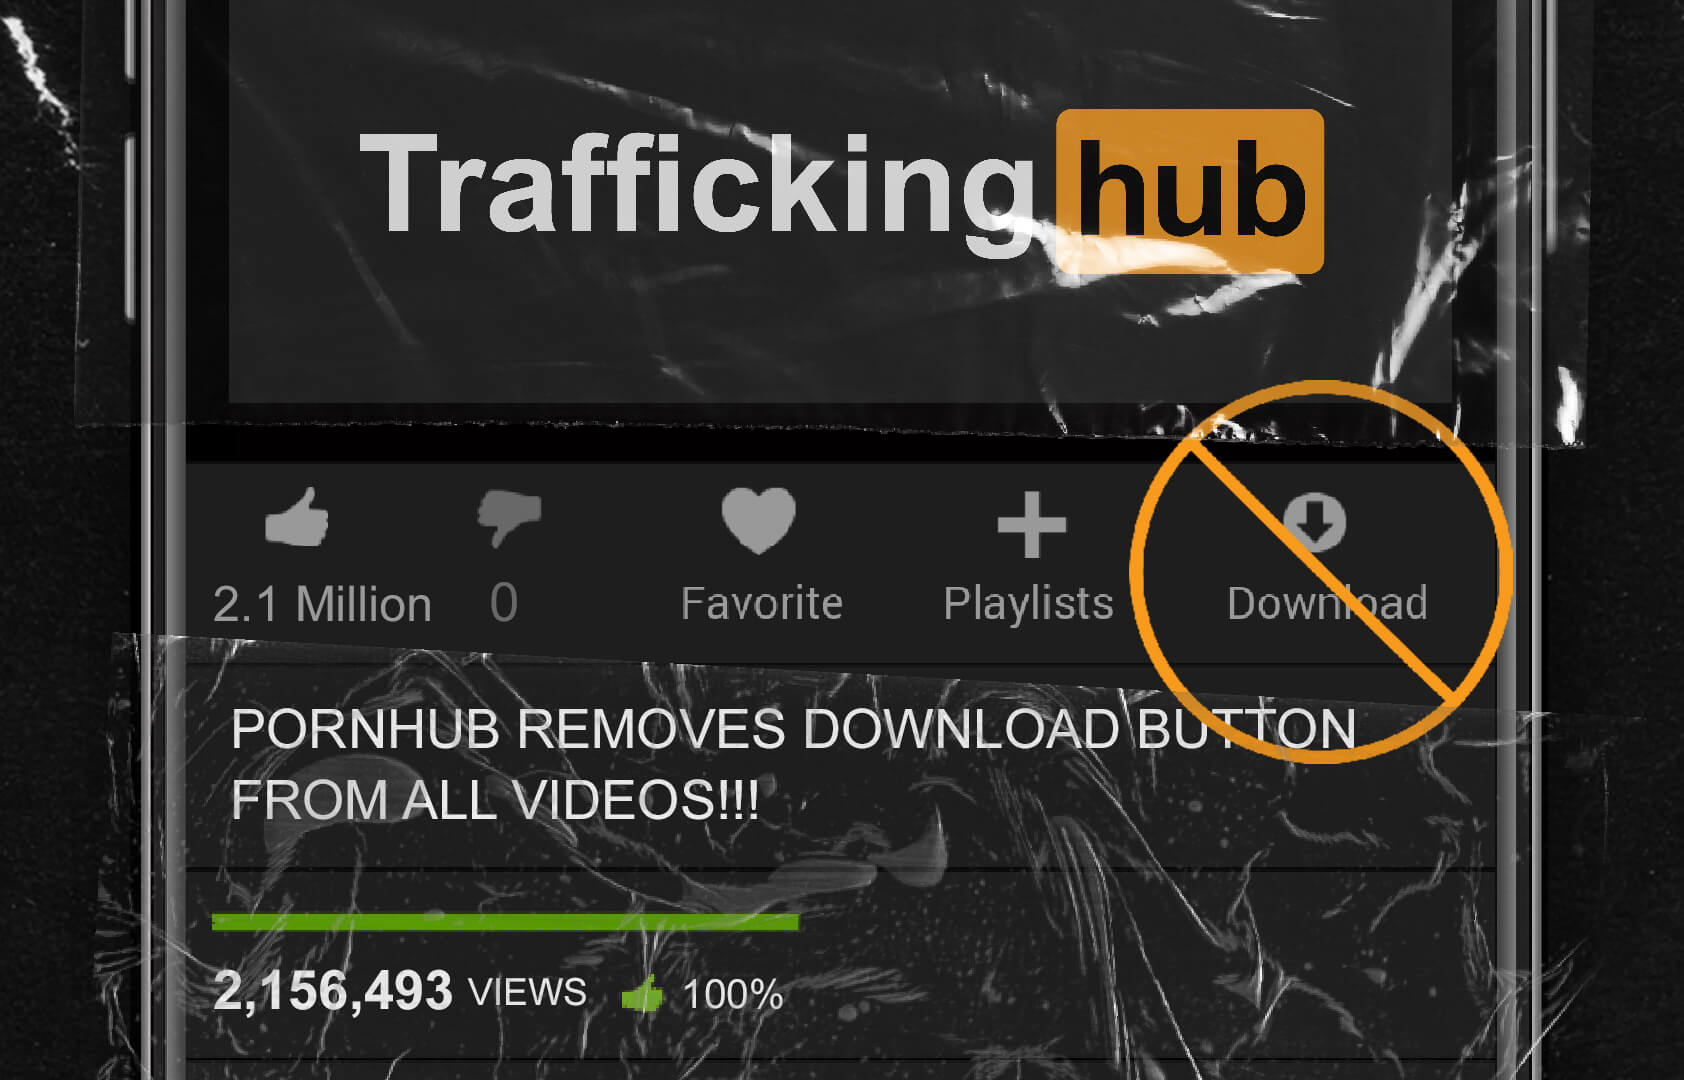 Pornhub Concedes to Major Demands of Traffickinghub ...